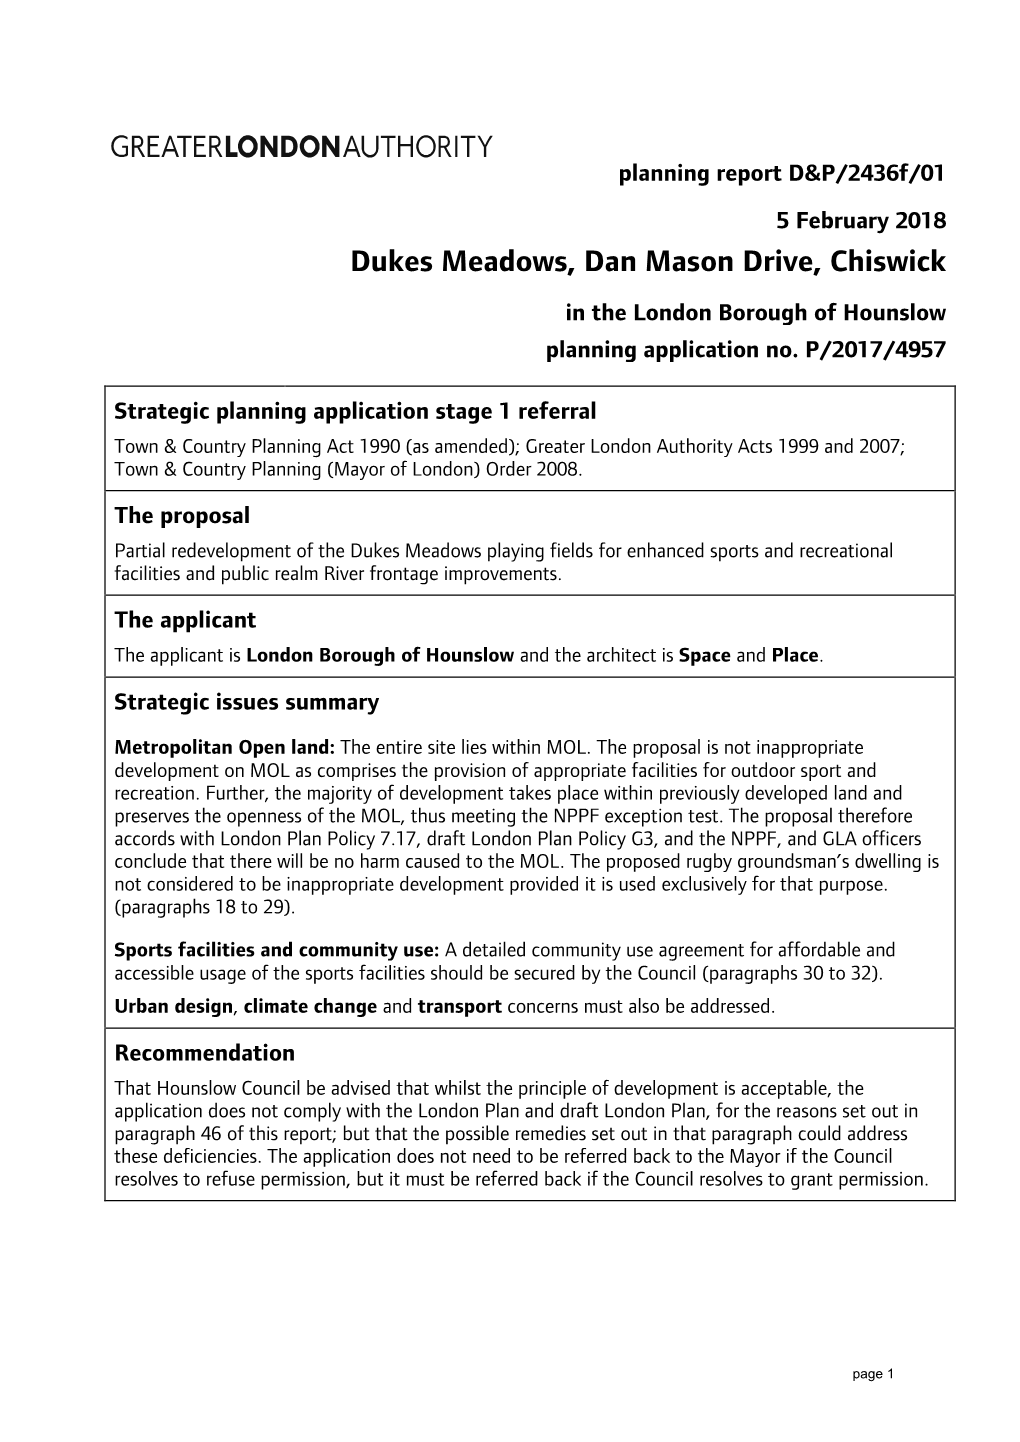 Dukes Meadows, Dan Mason Drive, Chiswick in the London Borough of Hounslow Planning Application No